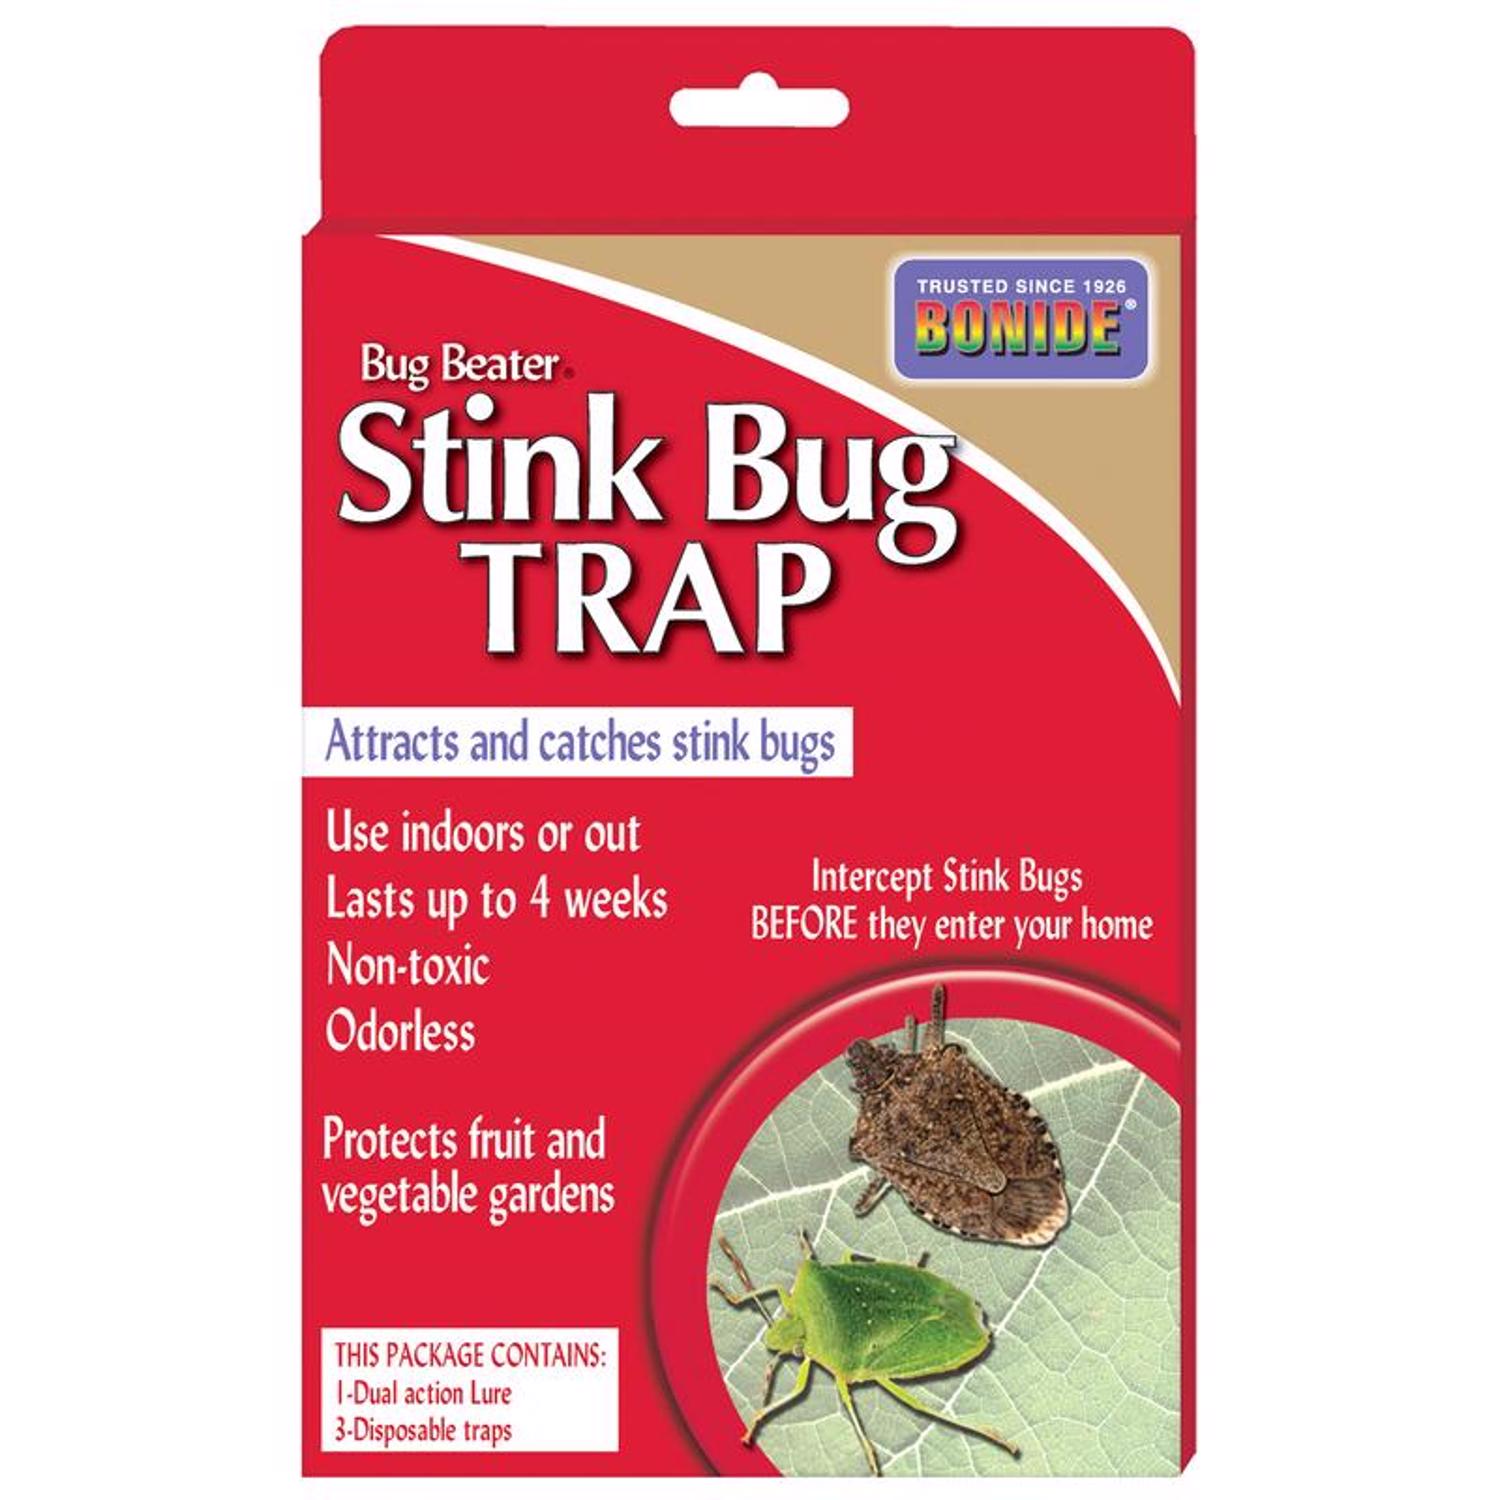 Bonide® Pantry Pest Traps, Set of 2